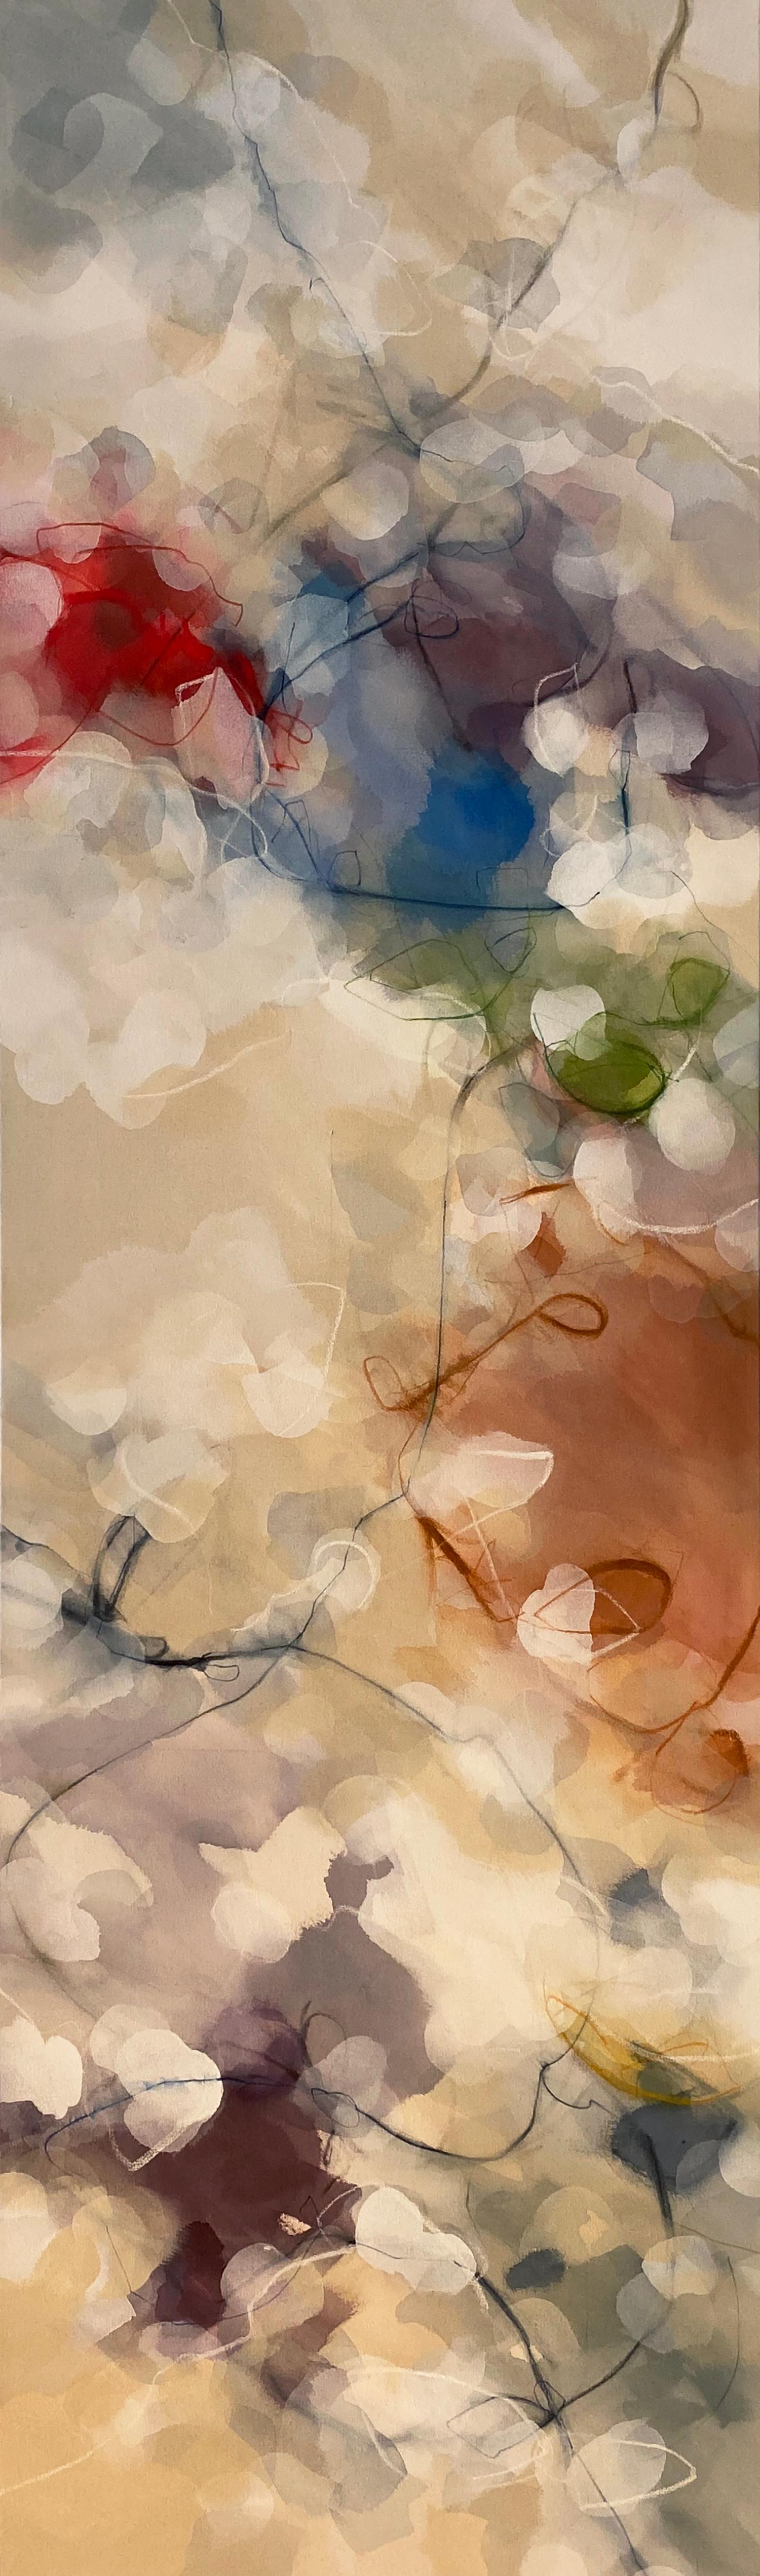 Cynthia Knapp Abstract Painting - "Petal Coruscation #1" - Nature-based abstract painting - Frankenthaler